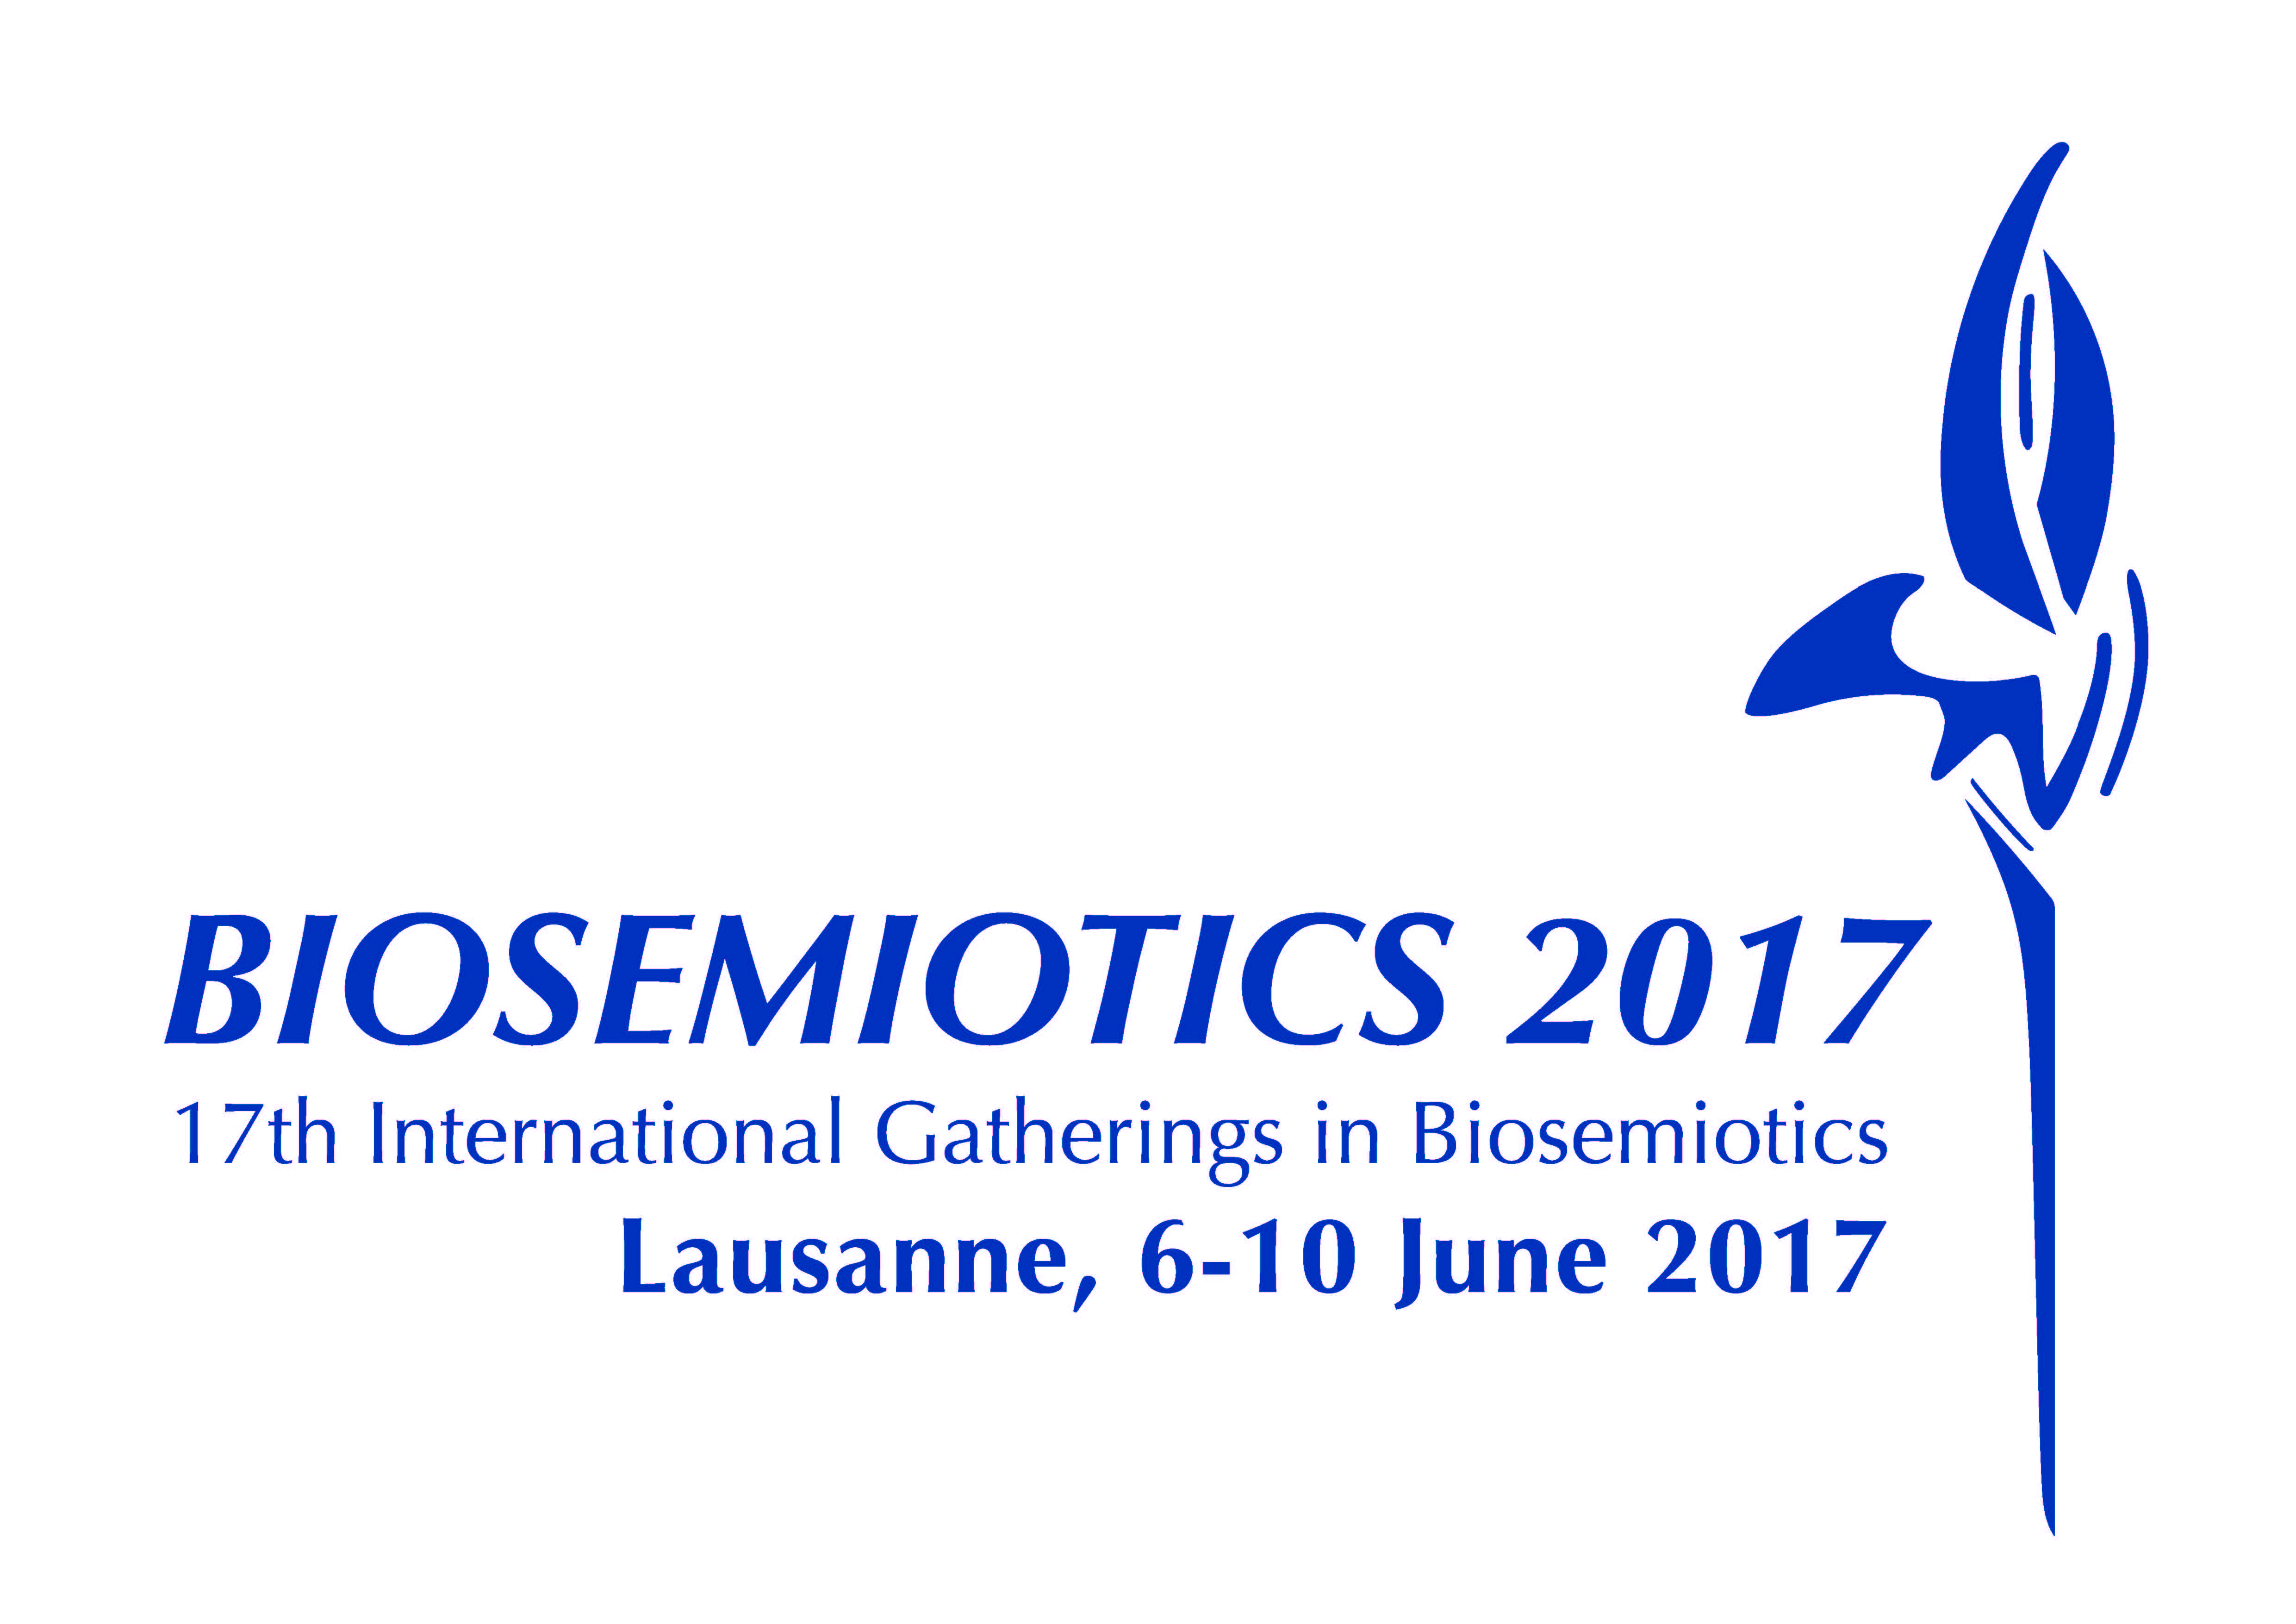 Biosemiotics 2017 logo